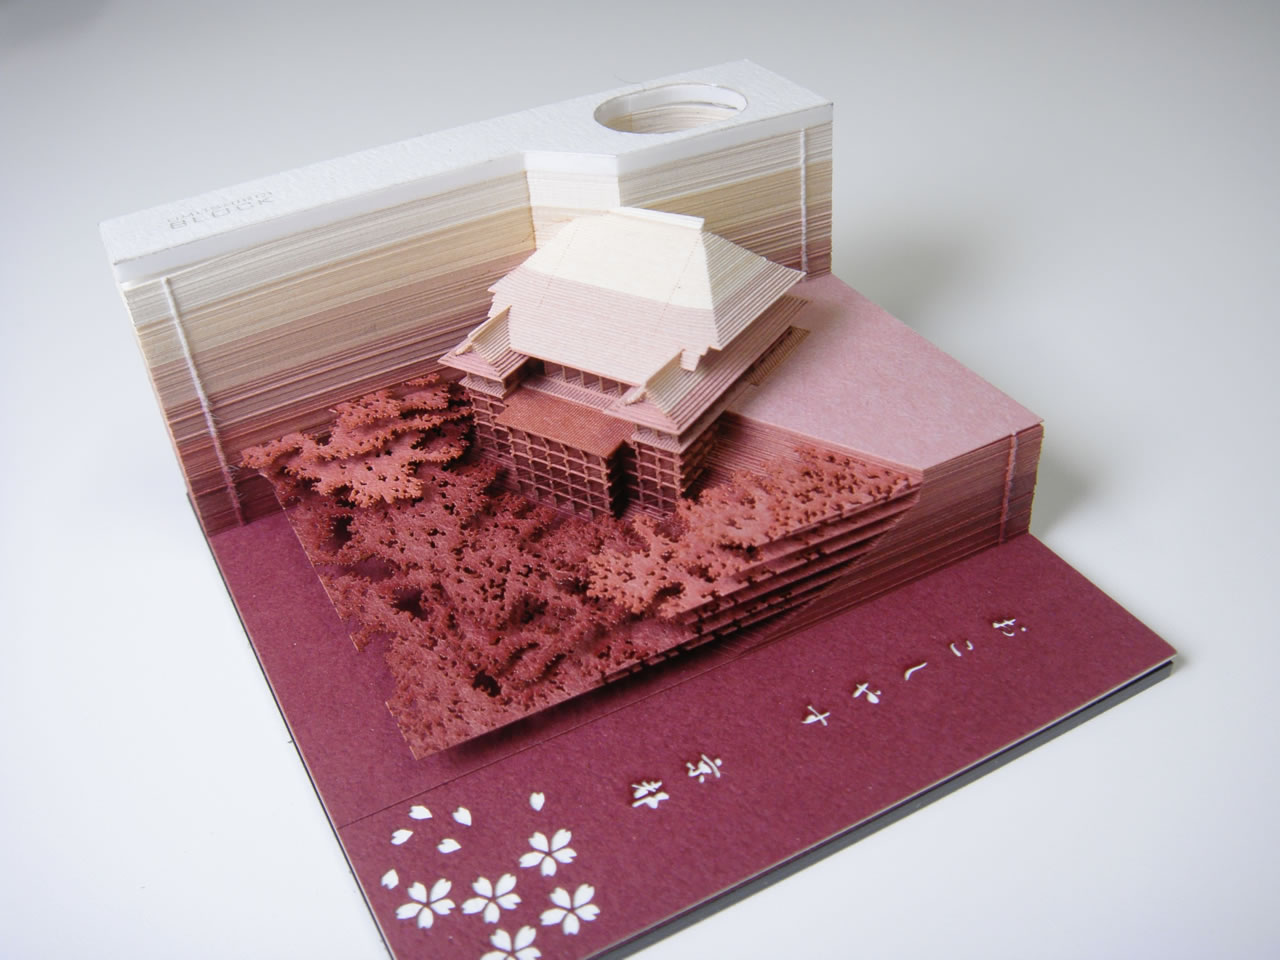 Omoshiro Block – Hidden Objects Inside Paper Memo Pads